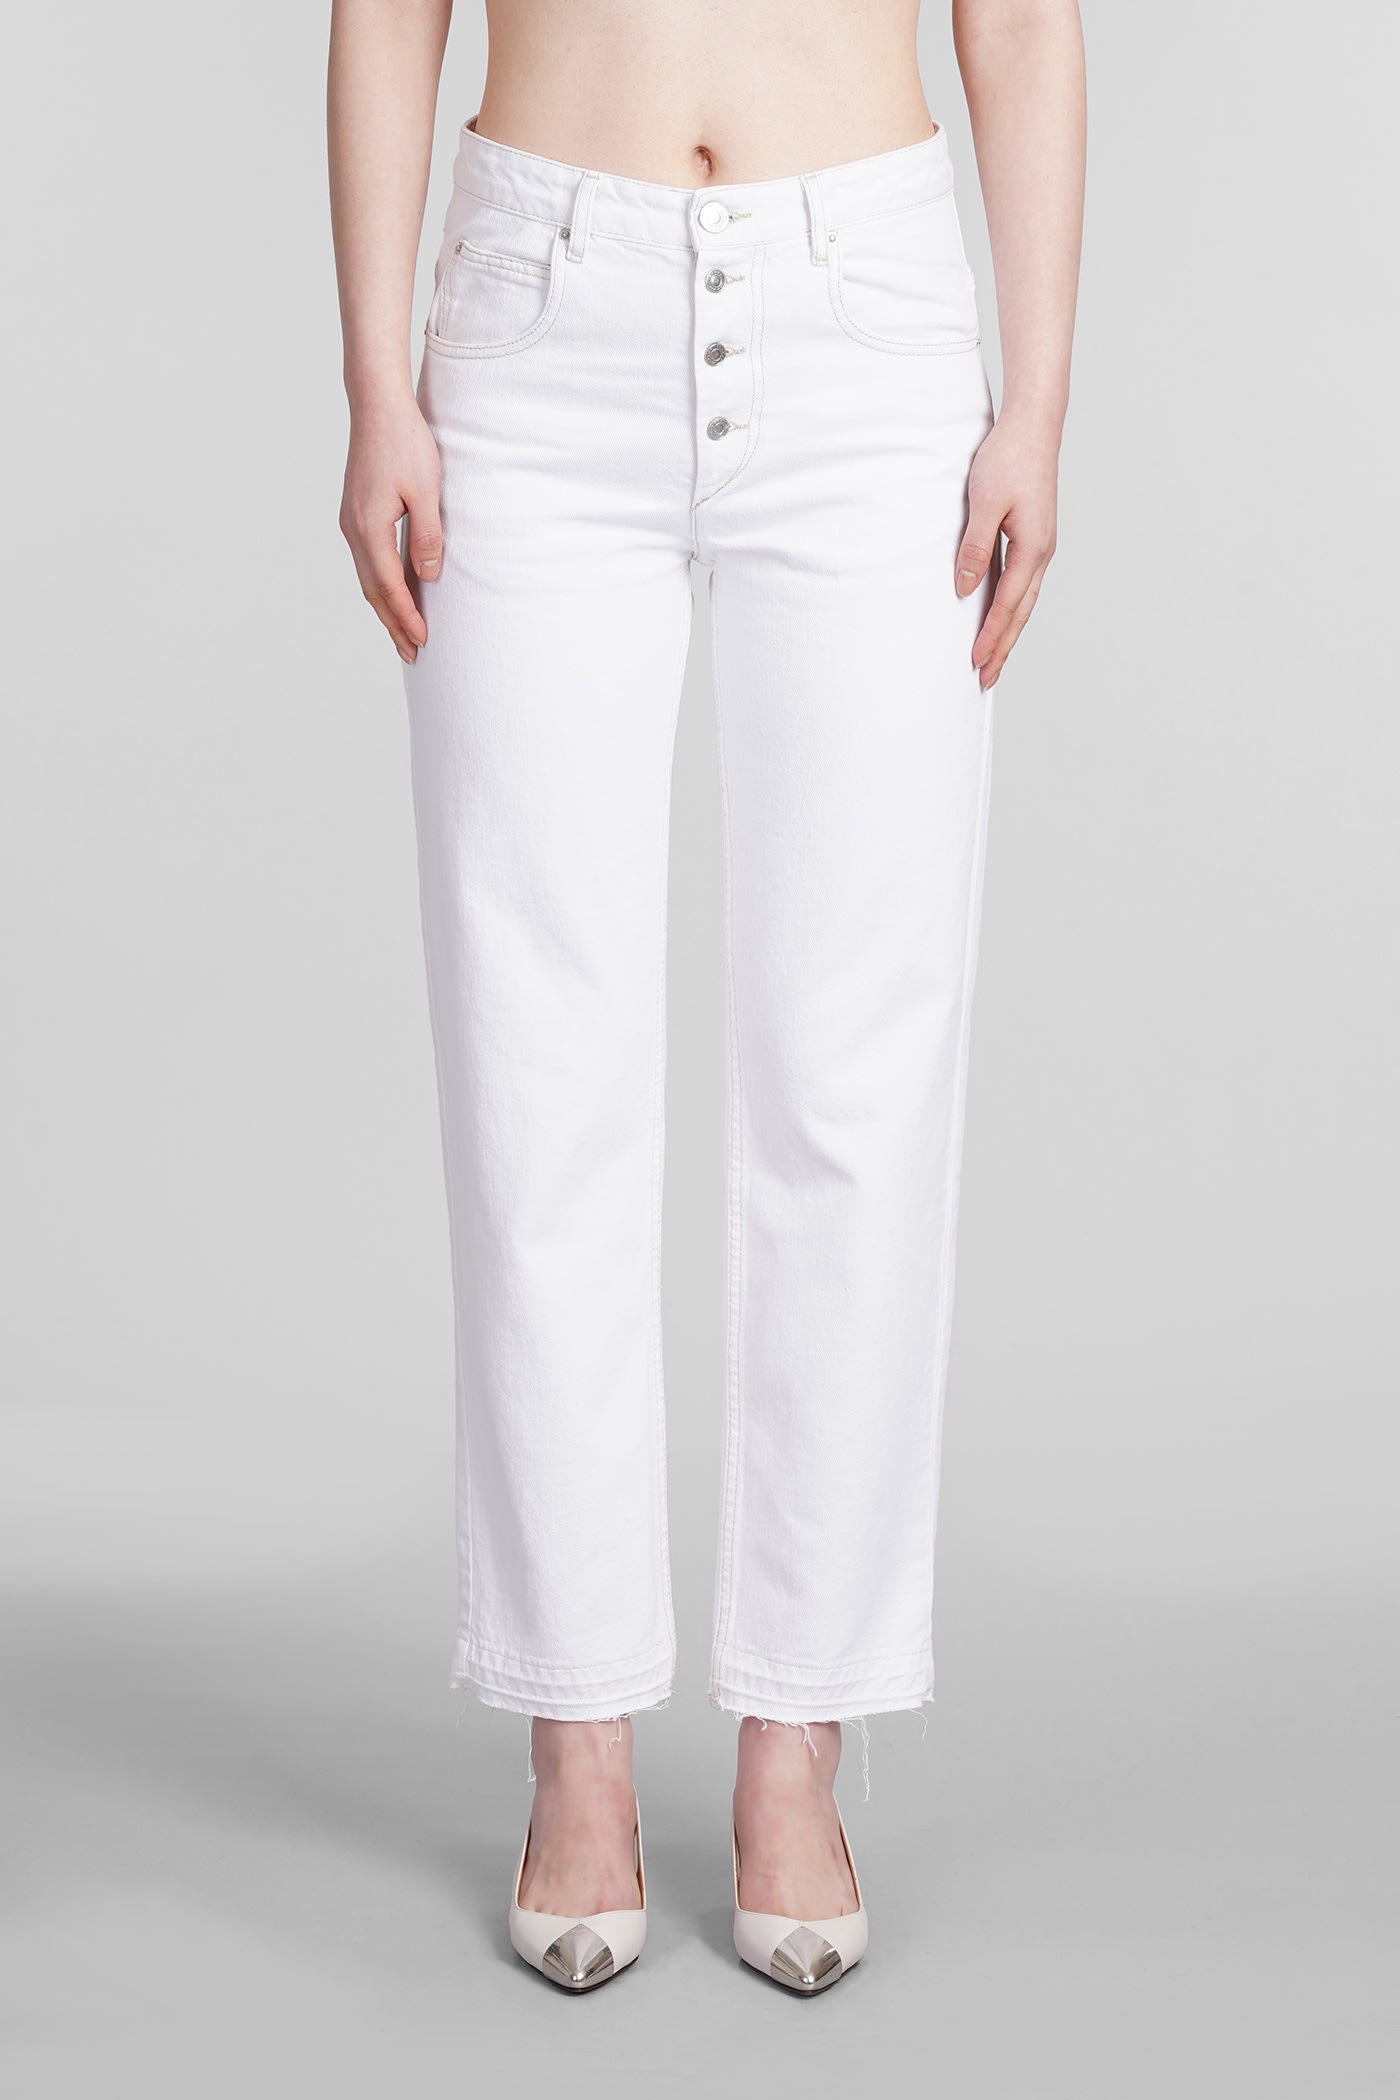 Lenadi high-rise cotton wide-leg pants in brown - Isabel Marant